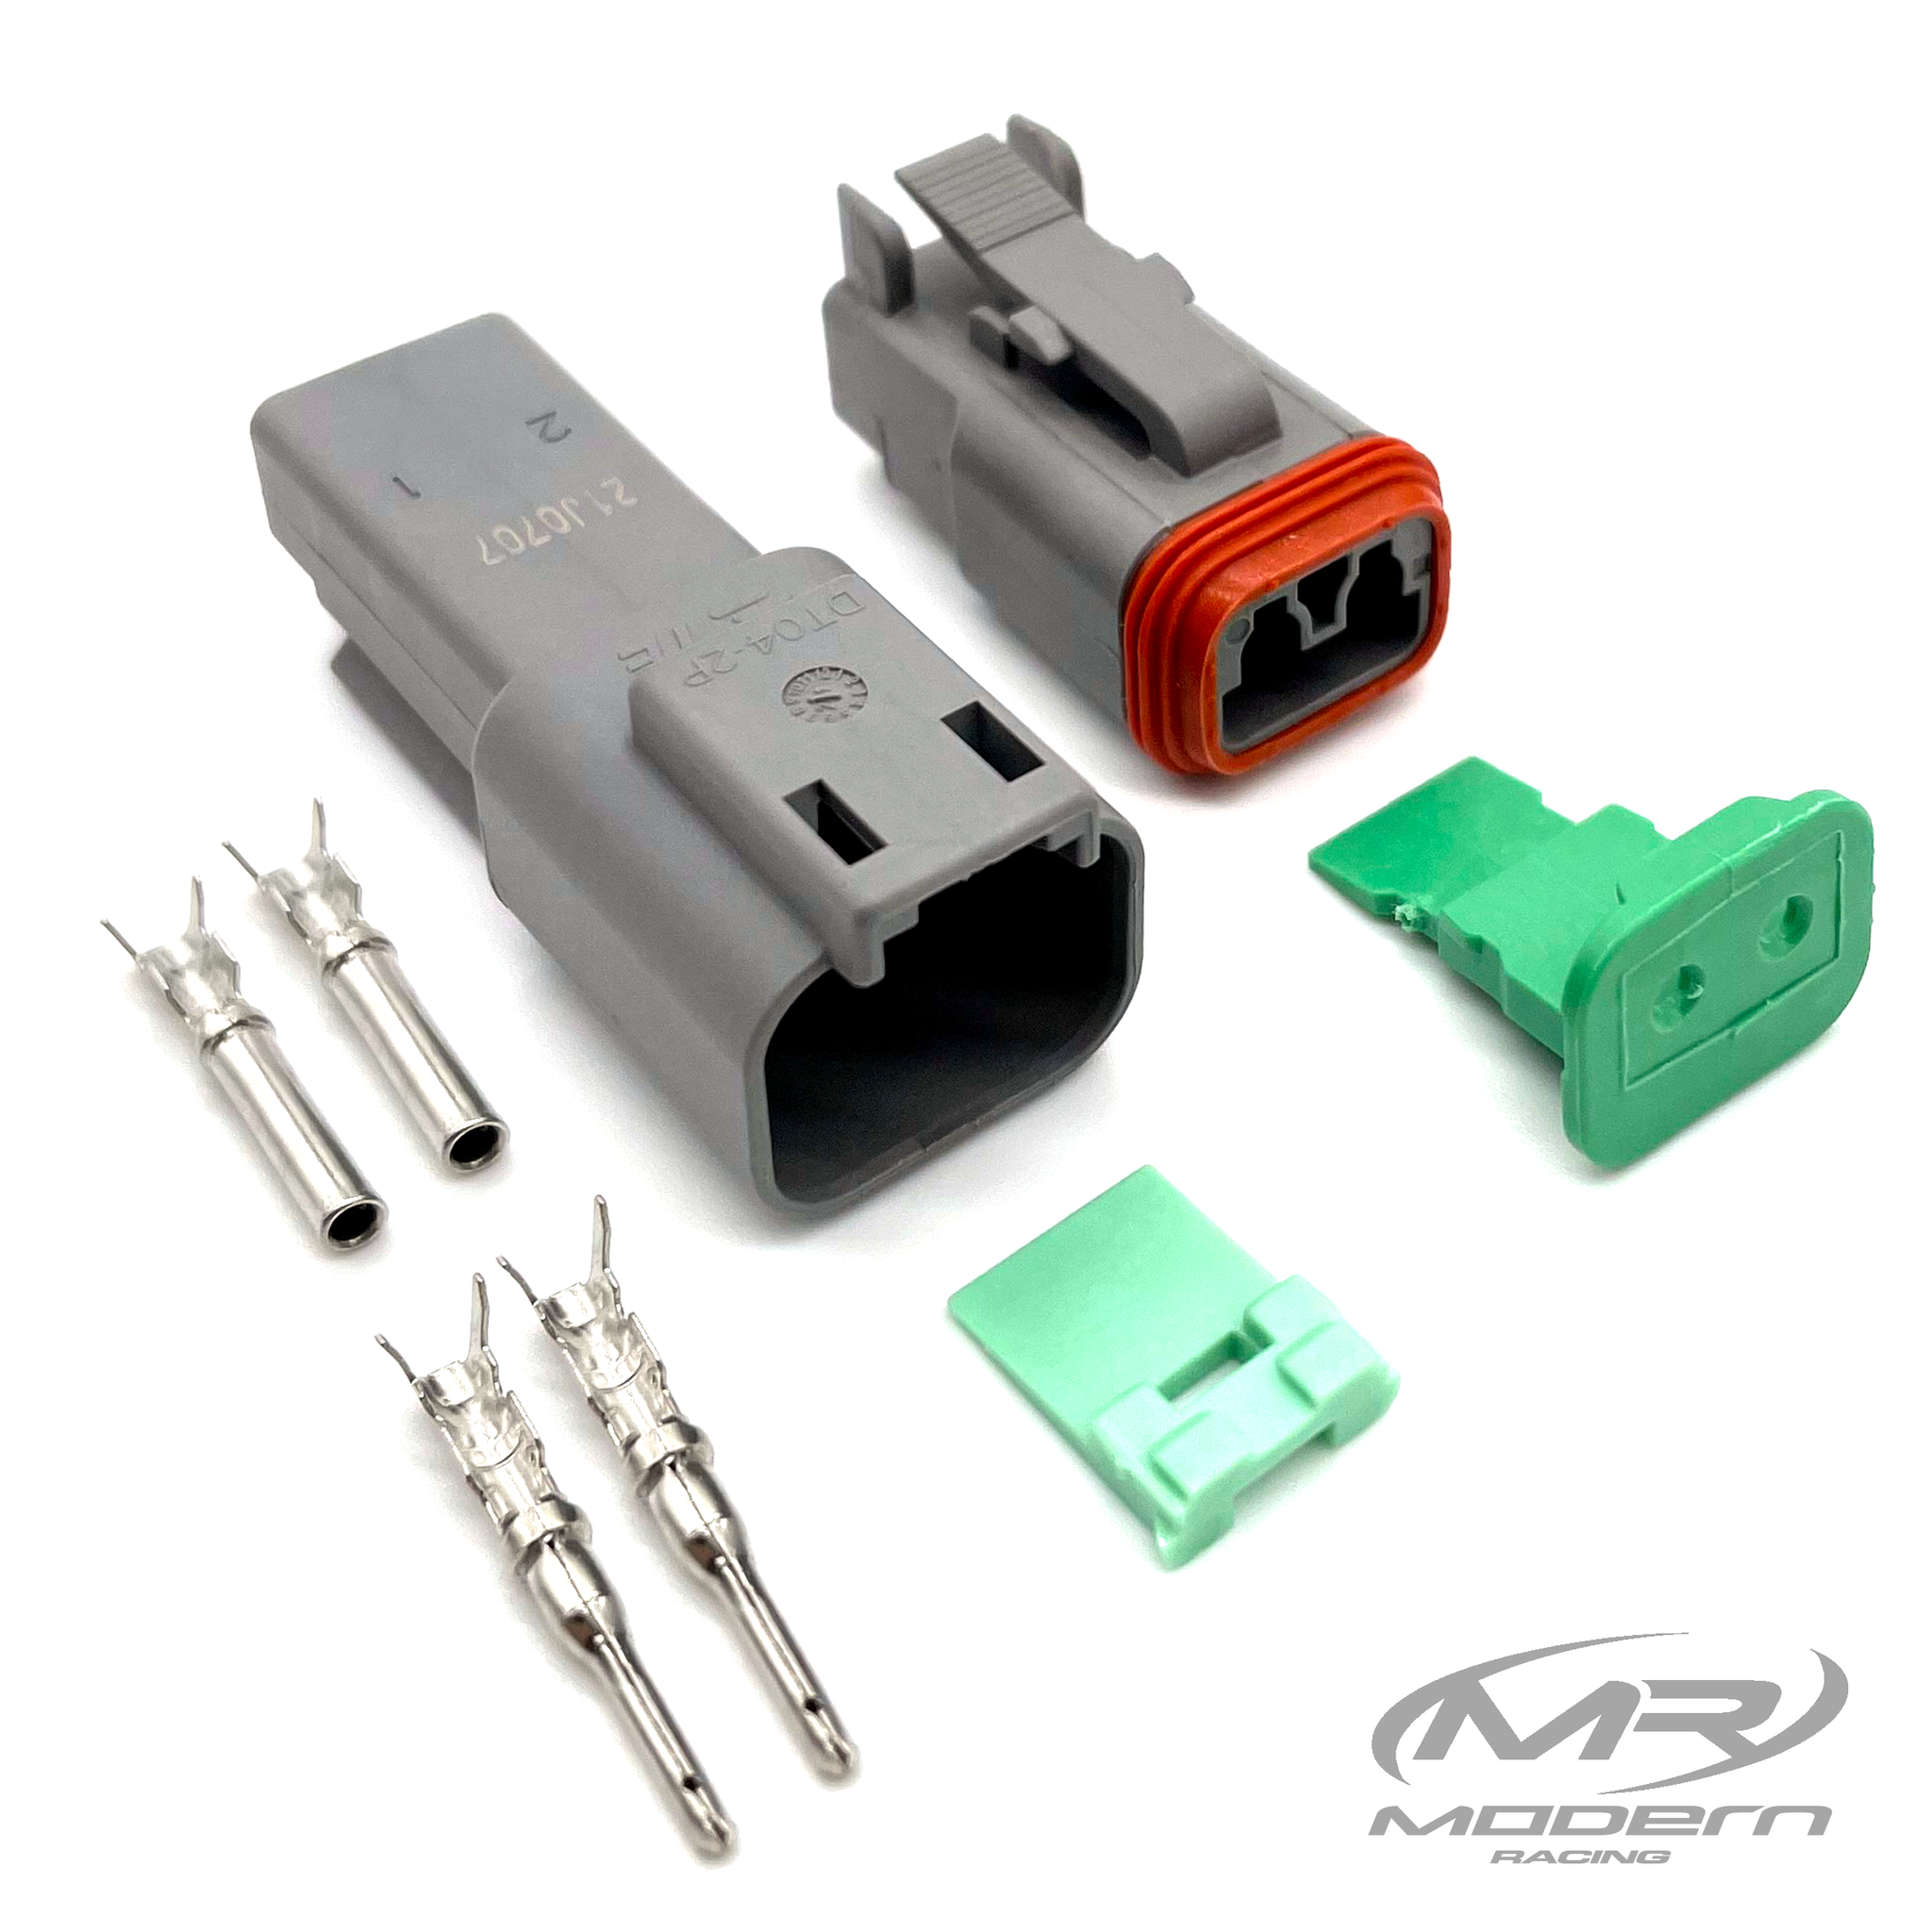 Deutsch DT 2 Socket/Pin Mating Pair Connector Kit (Gray)